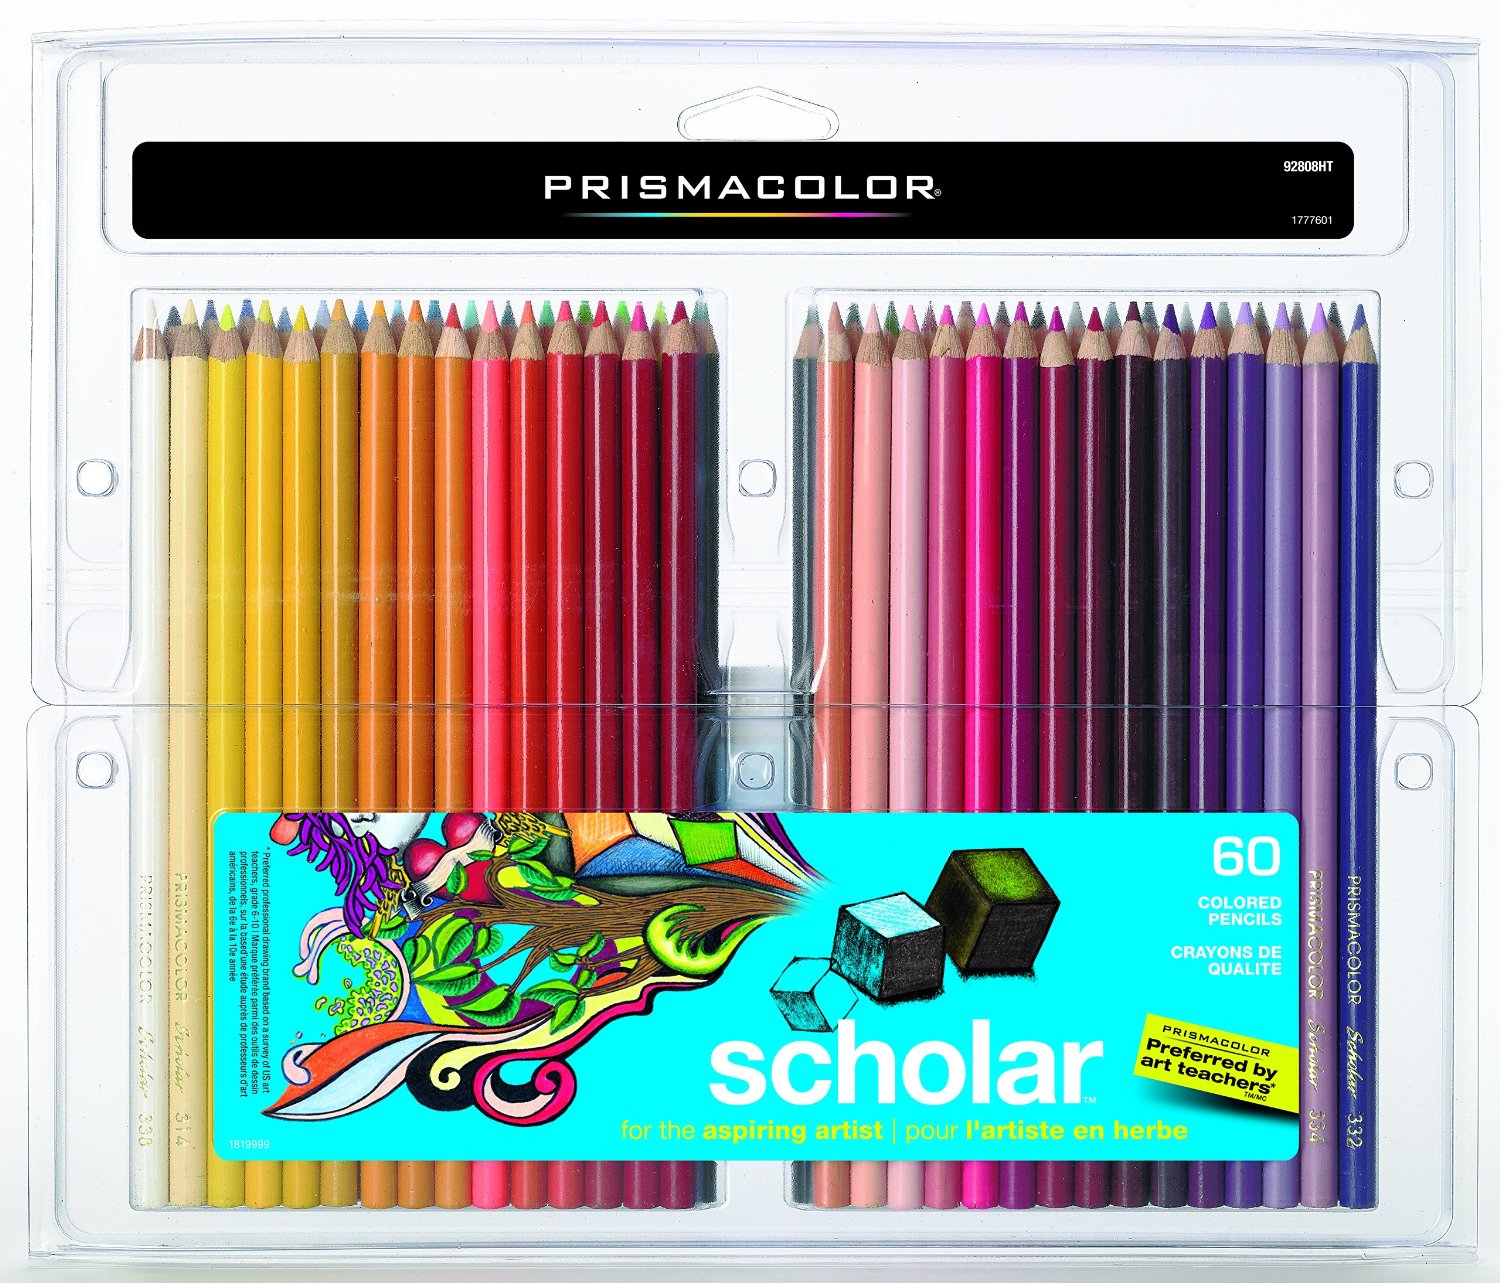 Prismacolor Scholar Colored Pencils, 60-Count – Just $17.99!